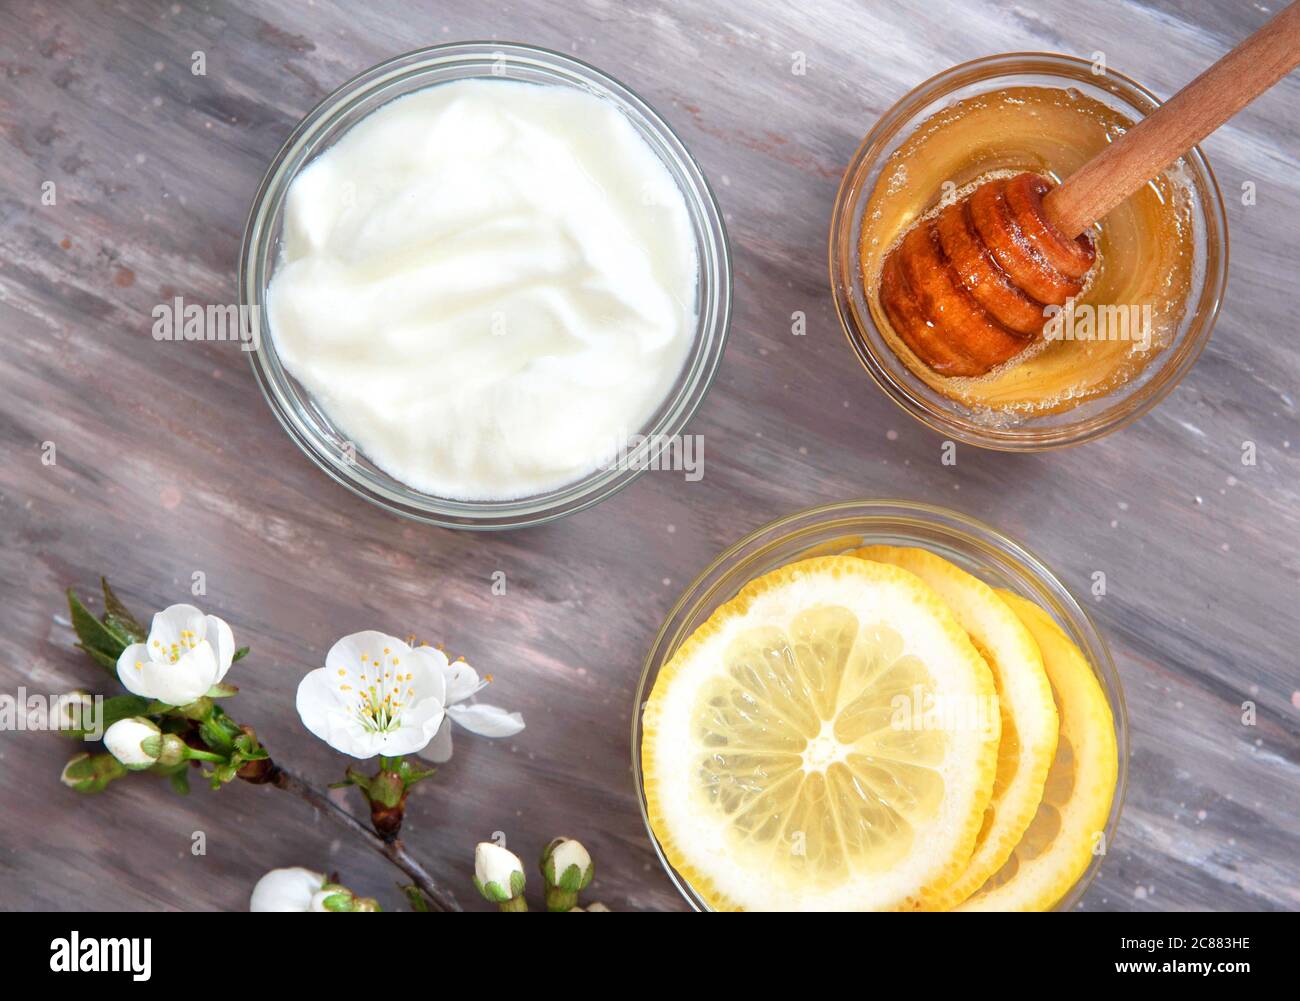 Ingredients for homemade face mask honey, lemon, yogurt Stock Photo - Alamy